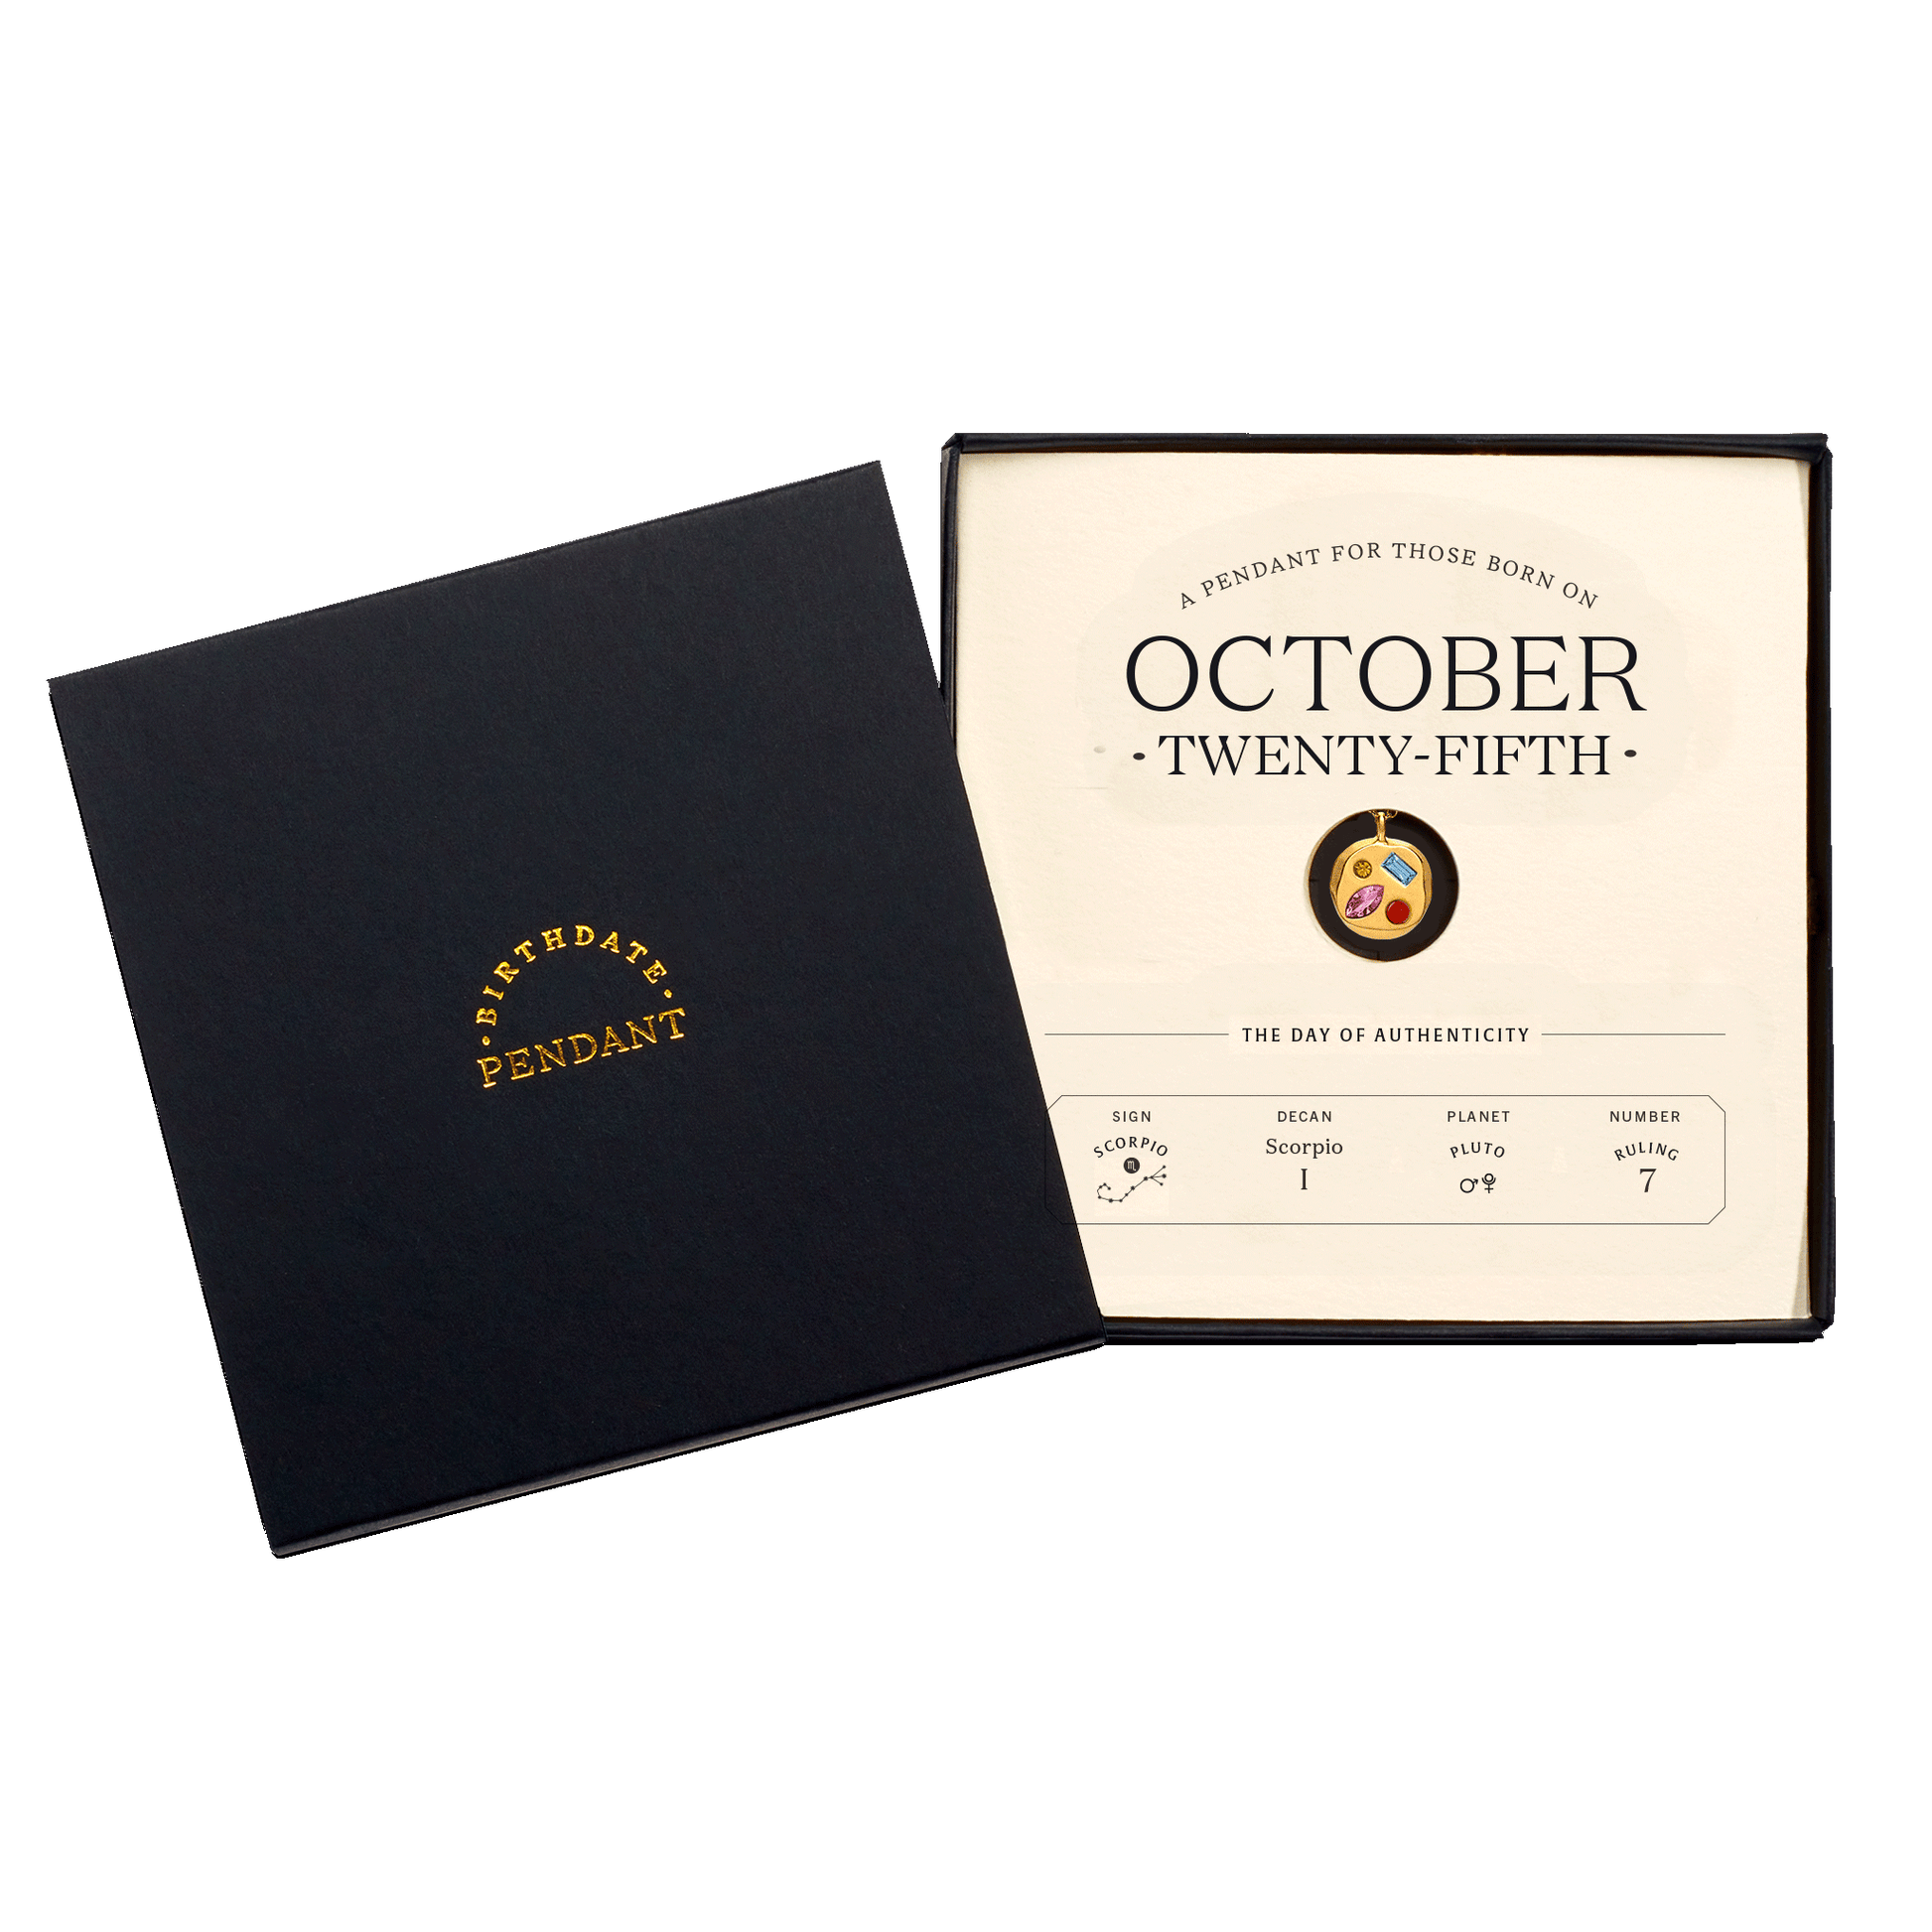 The October Twenty-Fifth Pendant inside its box